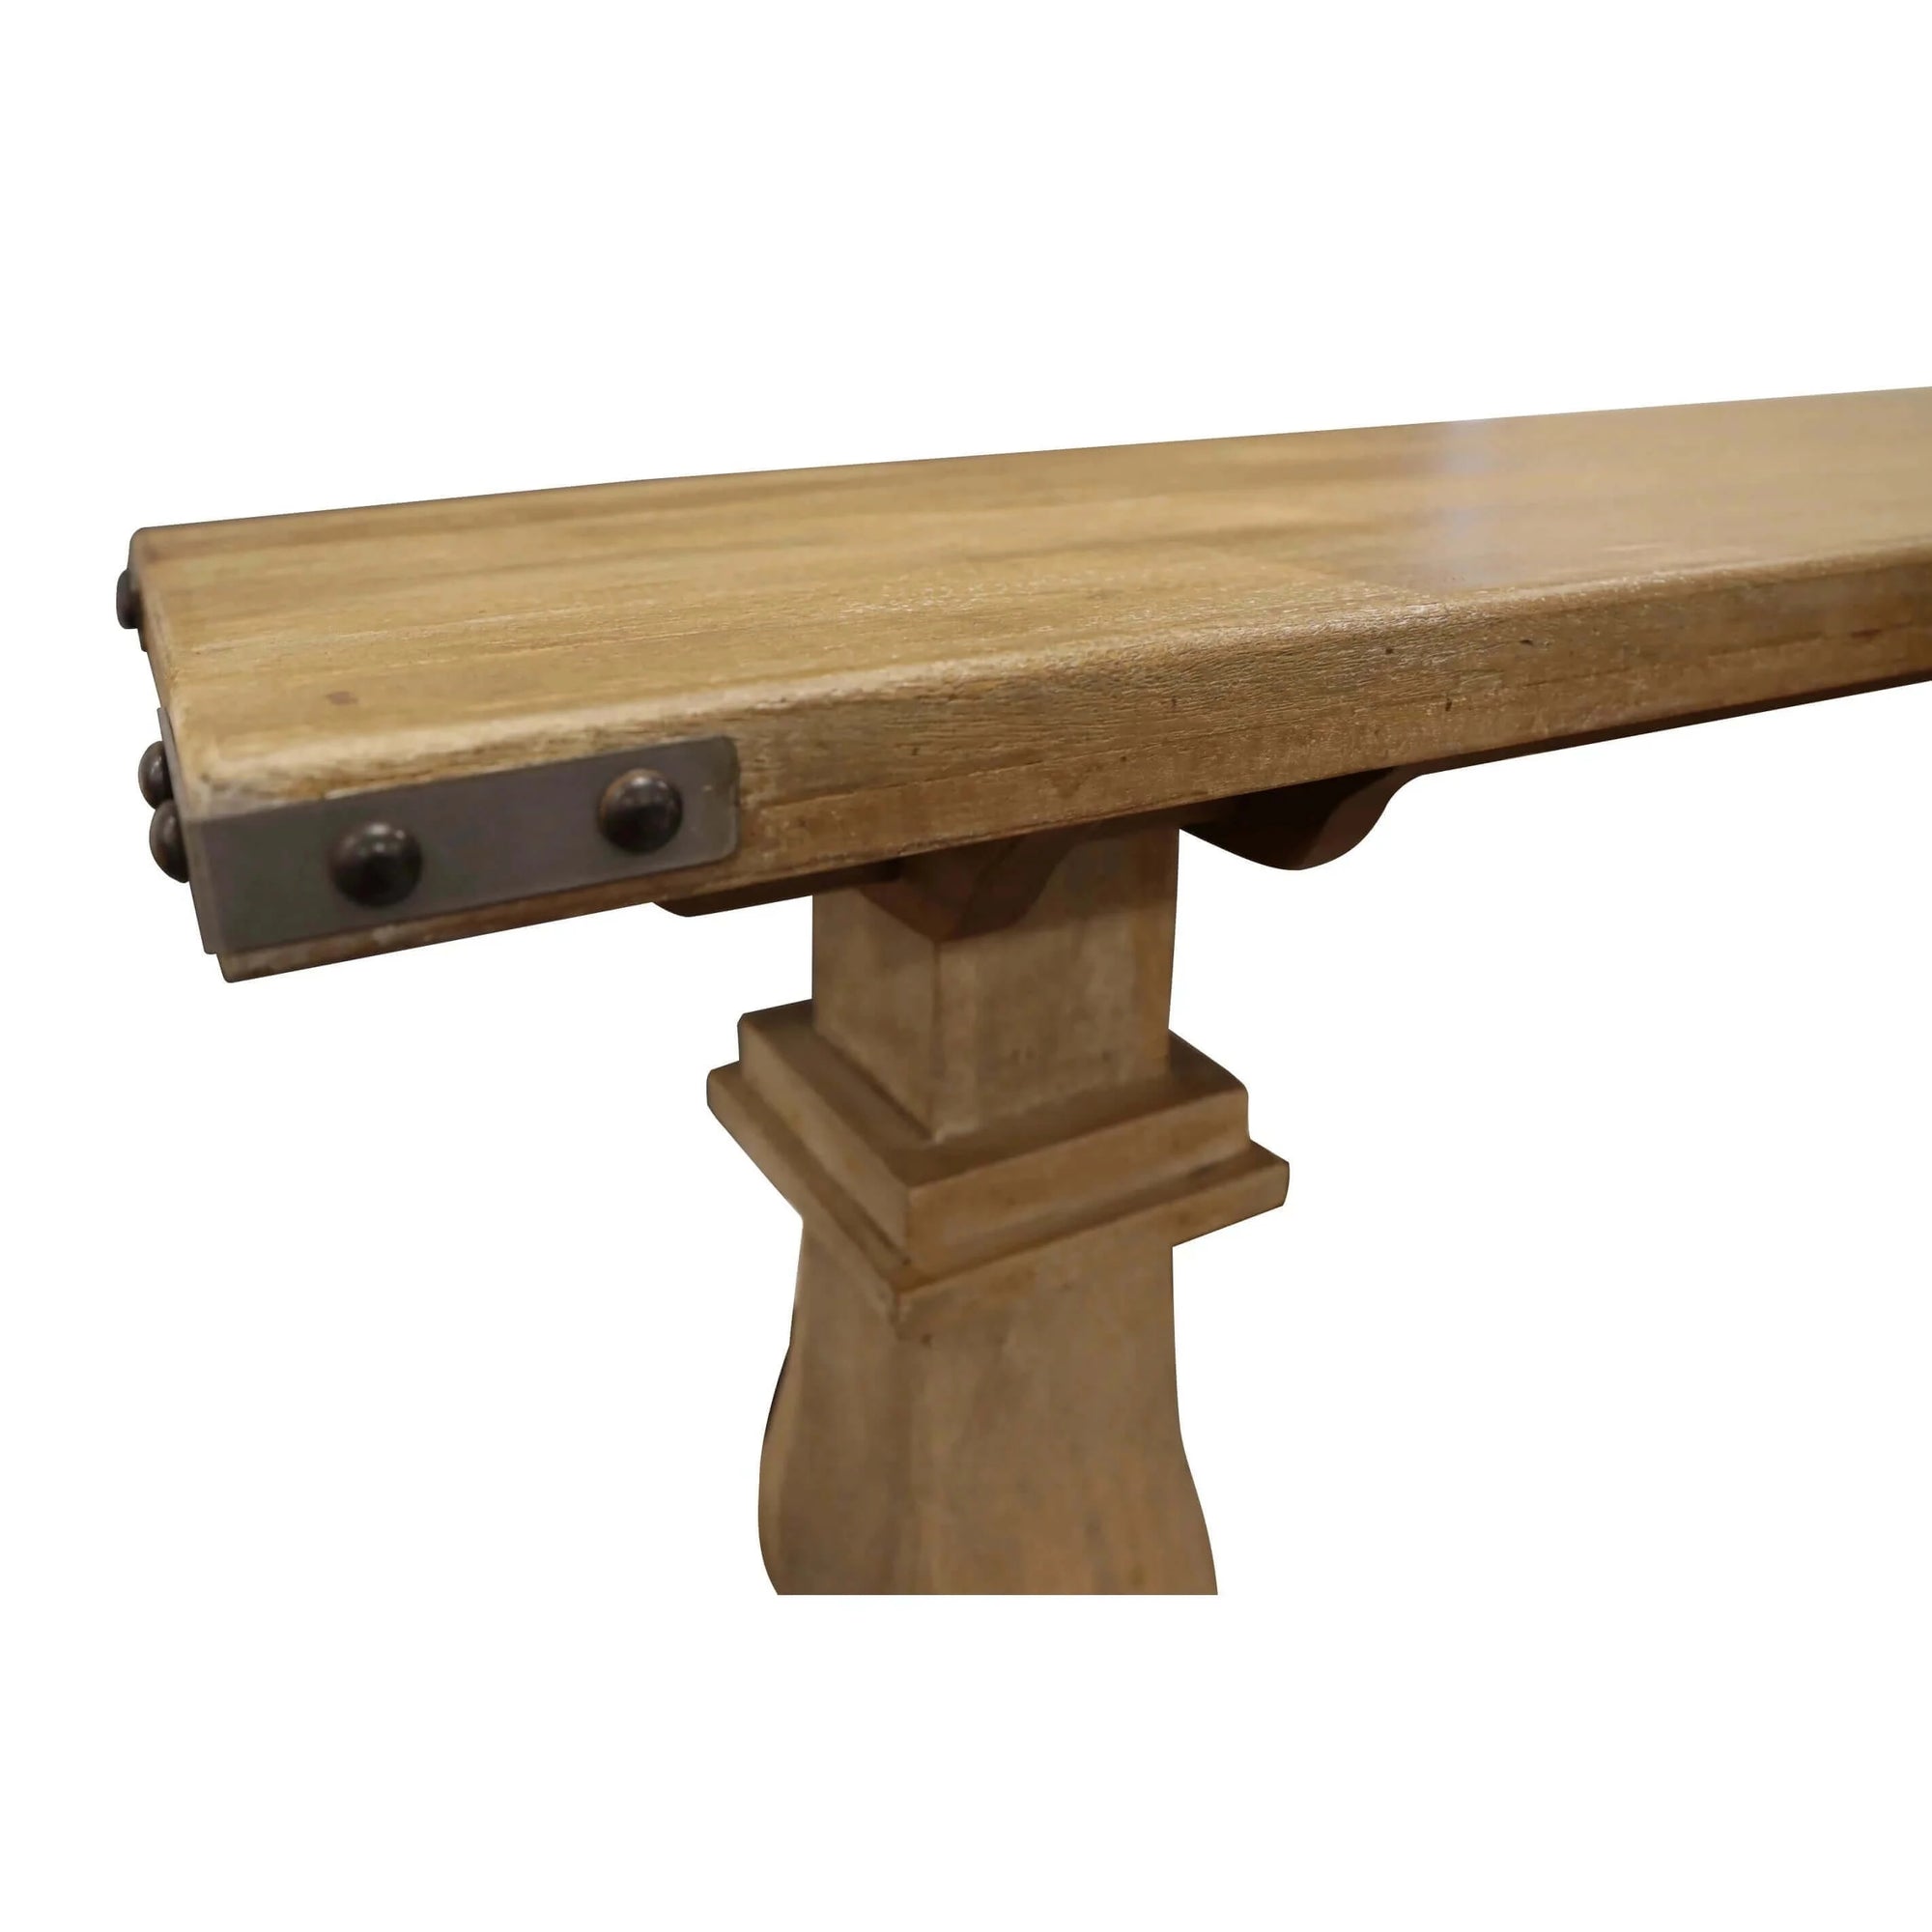 Buy gloriosa console entry hallway table 160cm pedestal mango wood - honey wash - upinteriors-Upinteriors